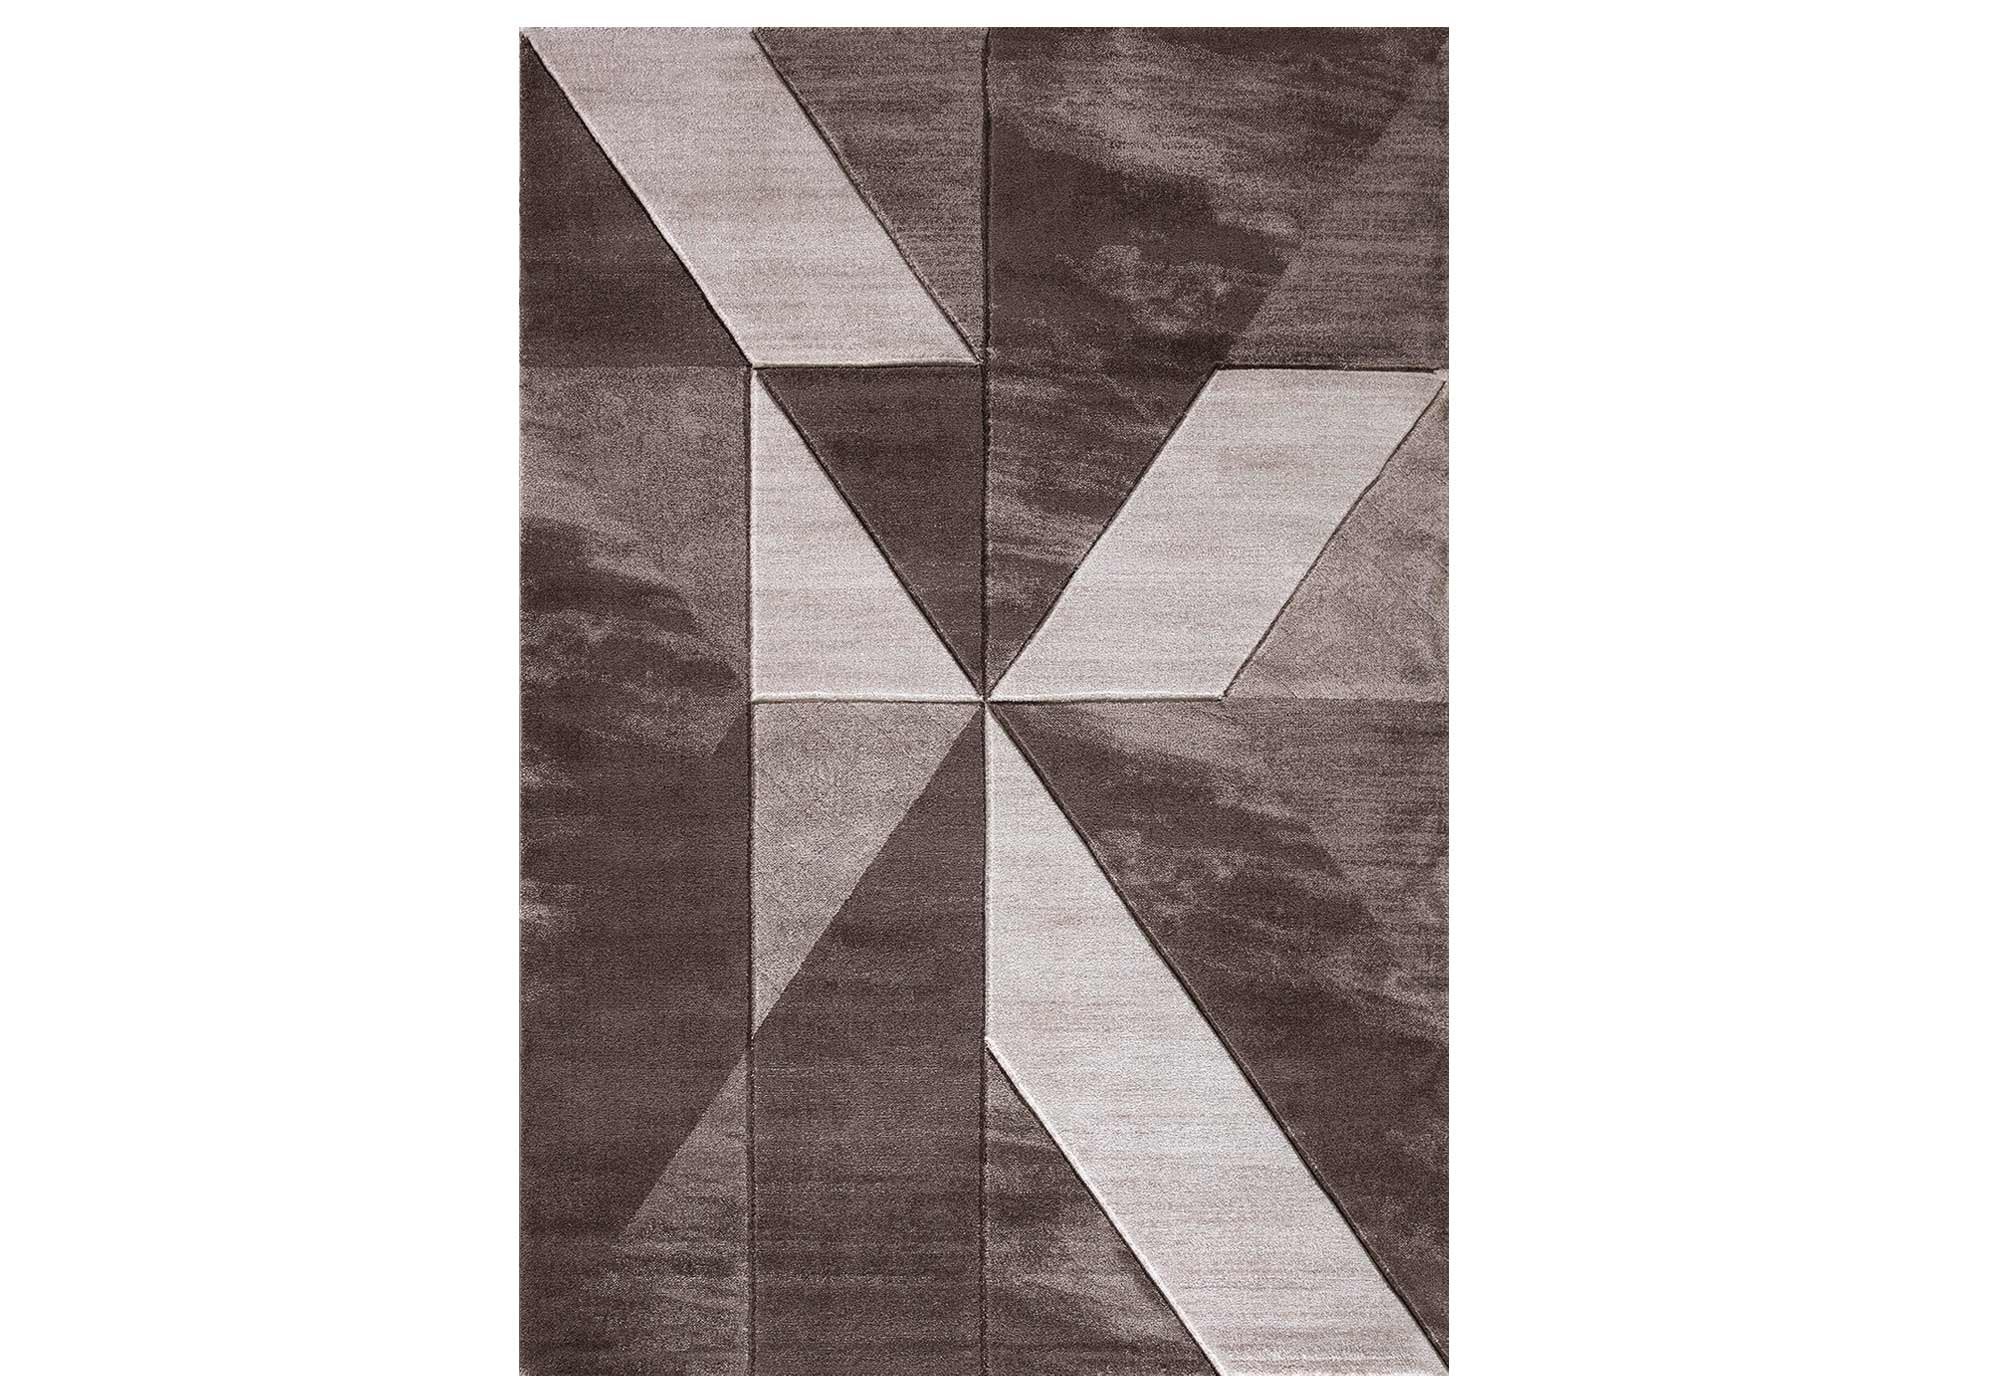 Festival Teppich 120 x 170 cm - beige - 11 mm Höhe - Konturenschnitt - Relax 210